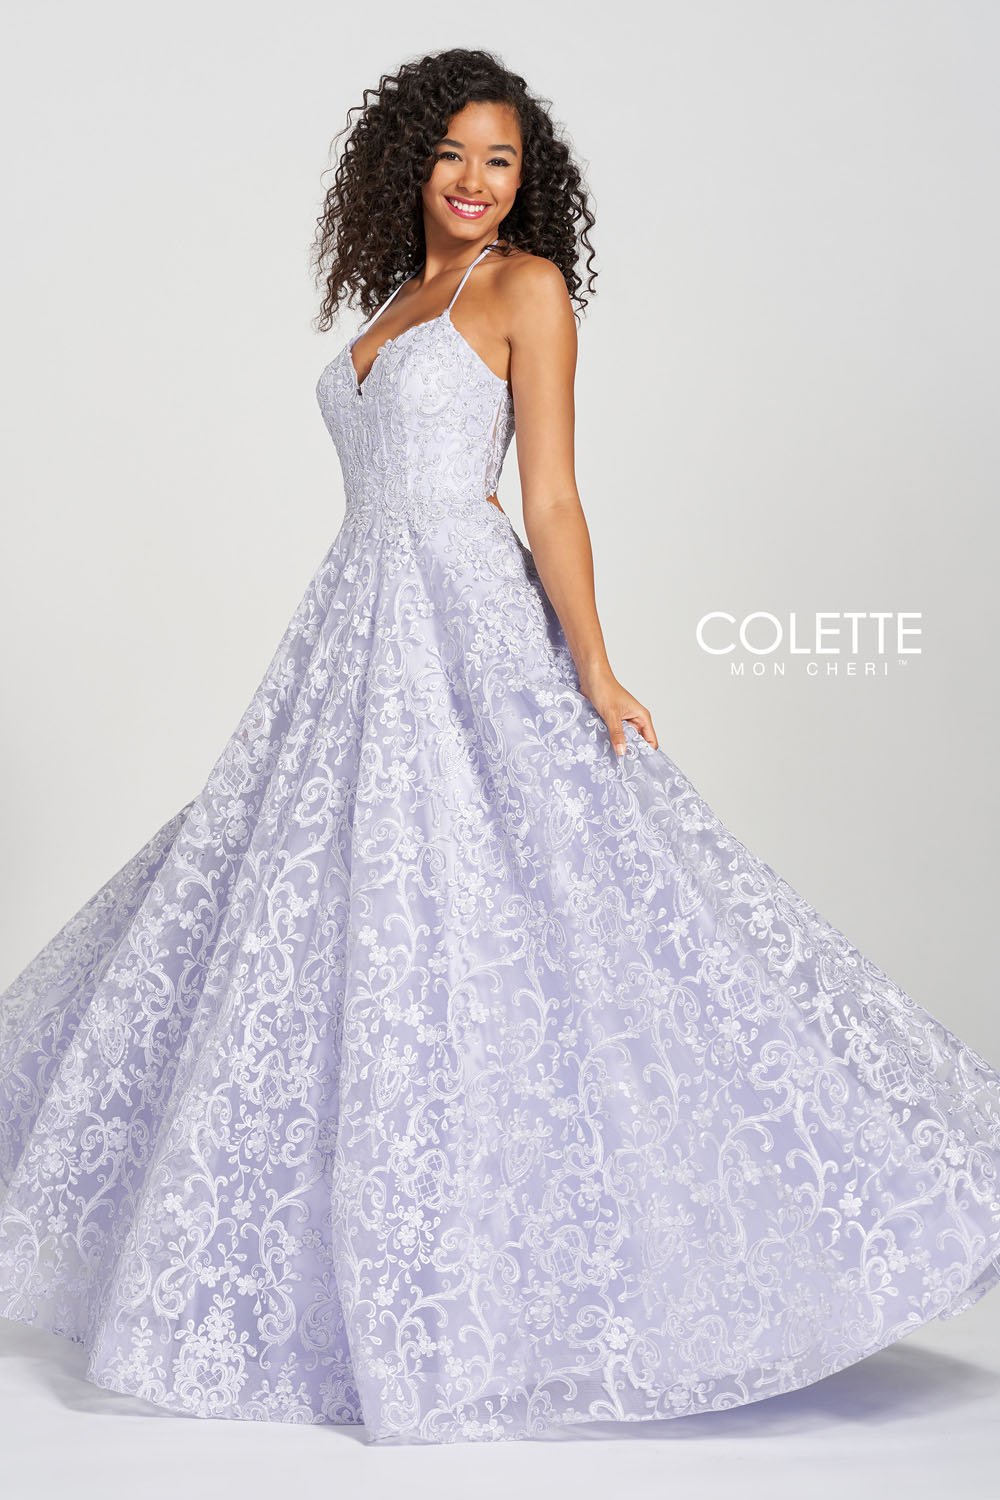 Colette CL12204 Lilac prom dresses.  Lilac prom dresses image by Colette.